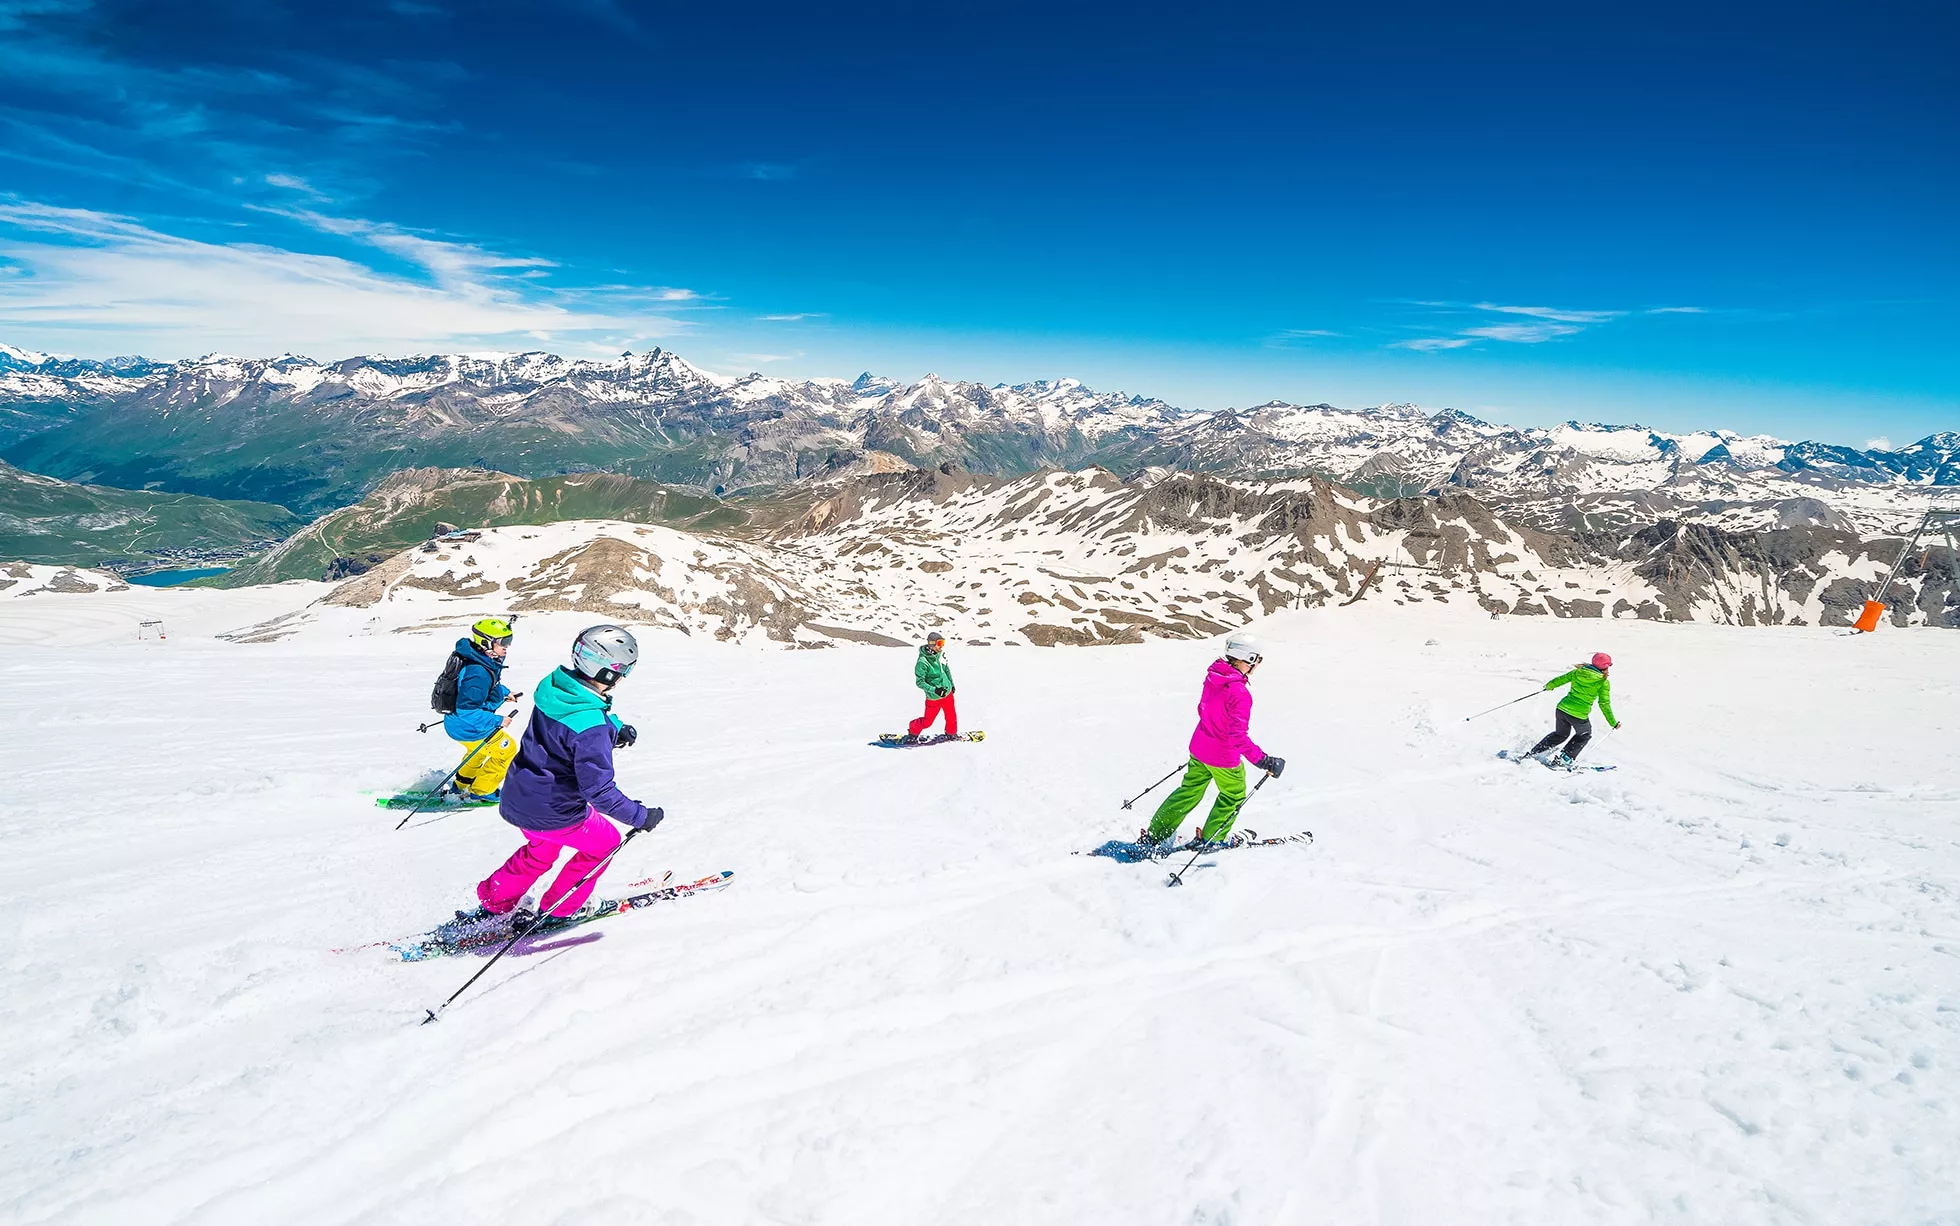 European Snowsport in Switzerland, Europe | Snowboarding,Skiing - Rated 4